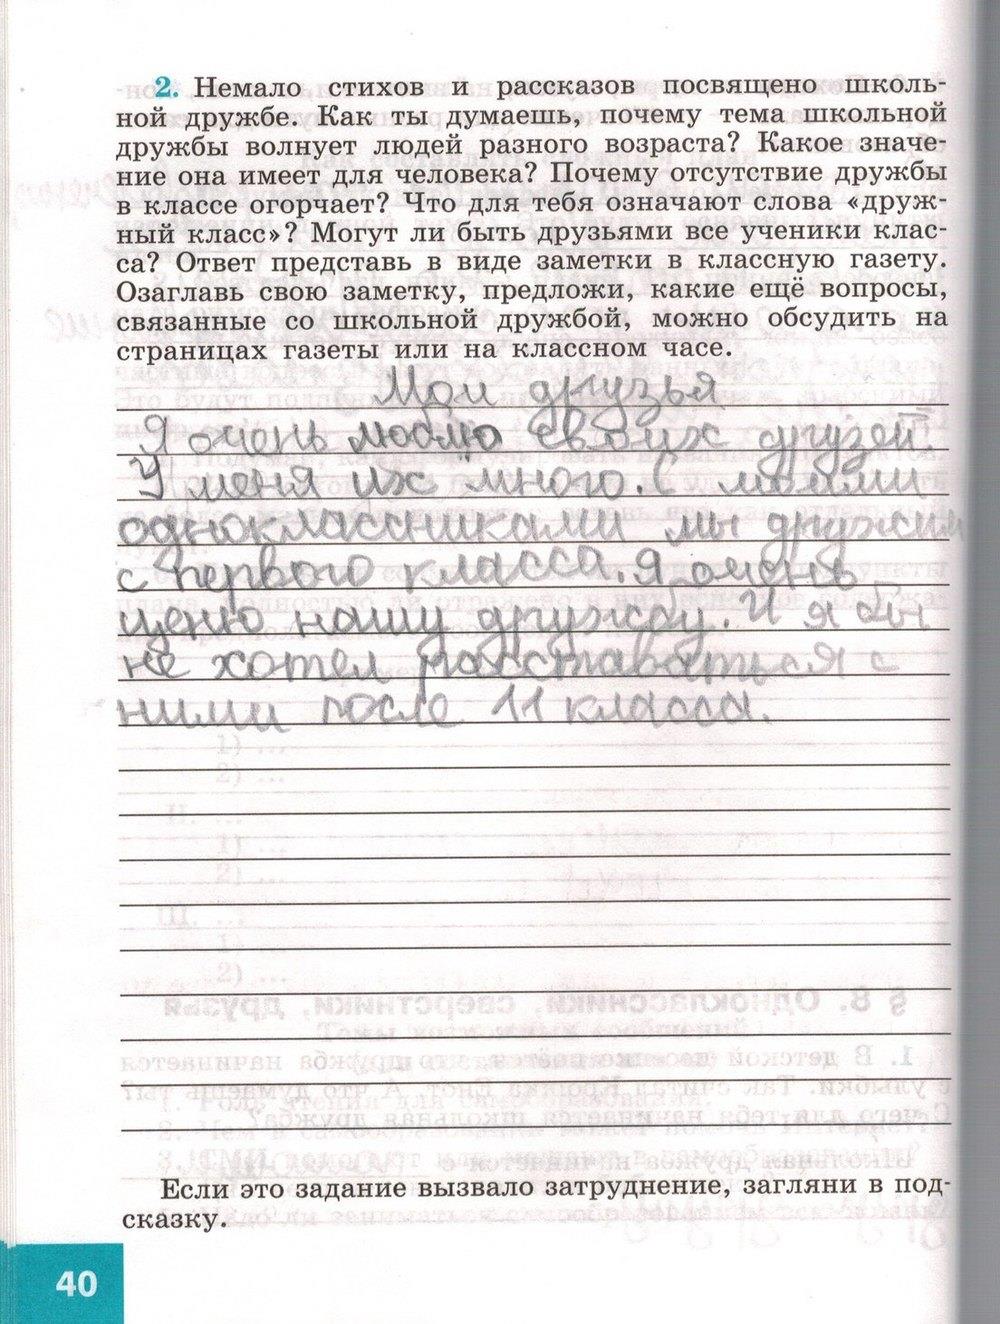 гдз 5 класс рабочая тетрадь страница 40 обществознание Иванова, Хотеенкова